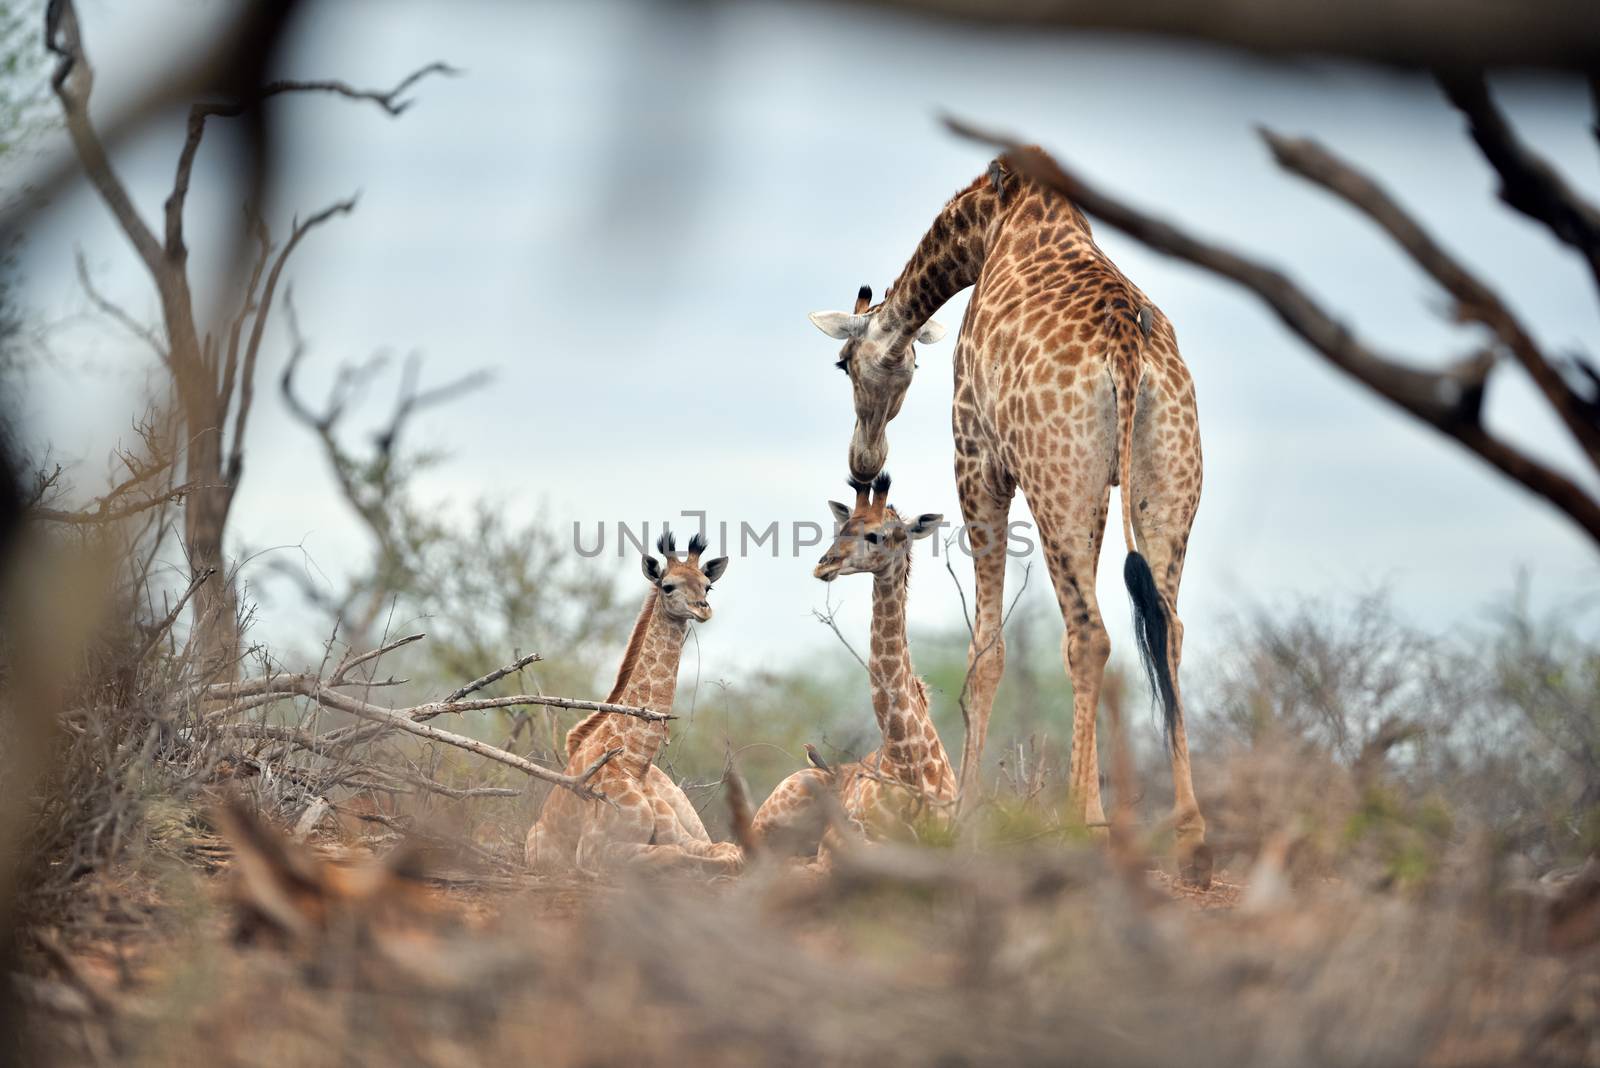 Giraffe in the wilderness of Africa